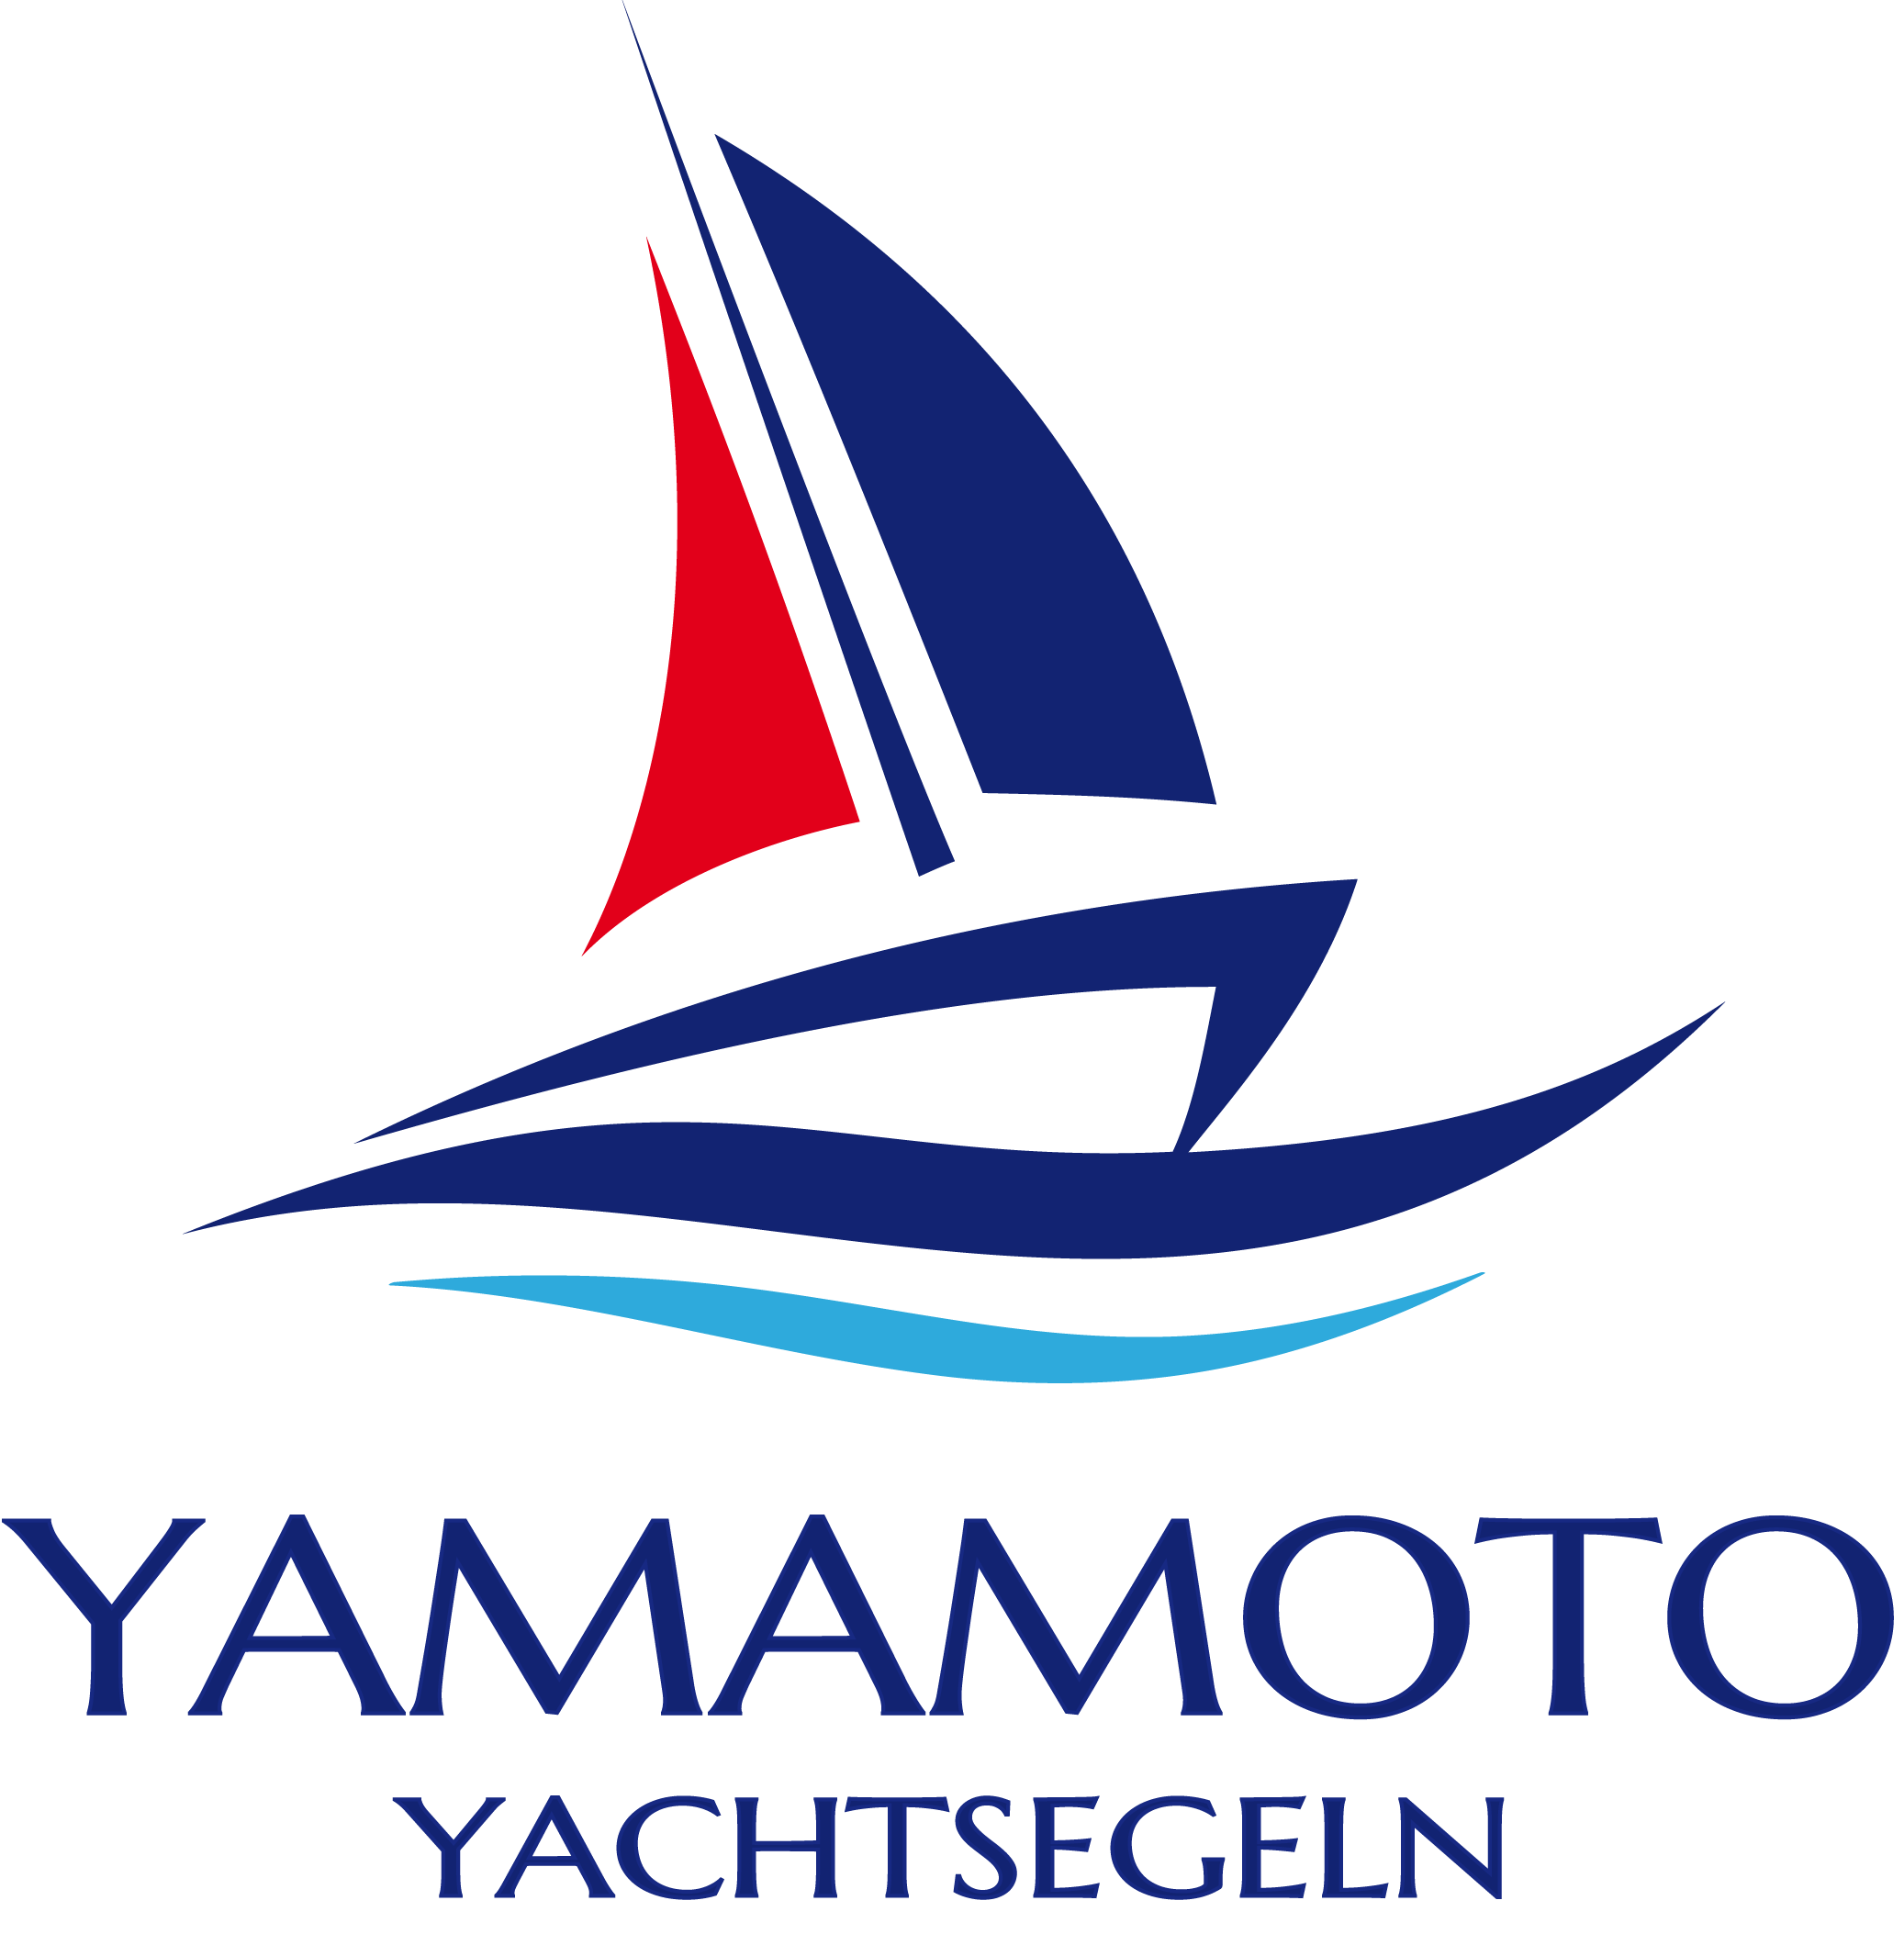 Yamamoto Yachtsegeln